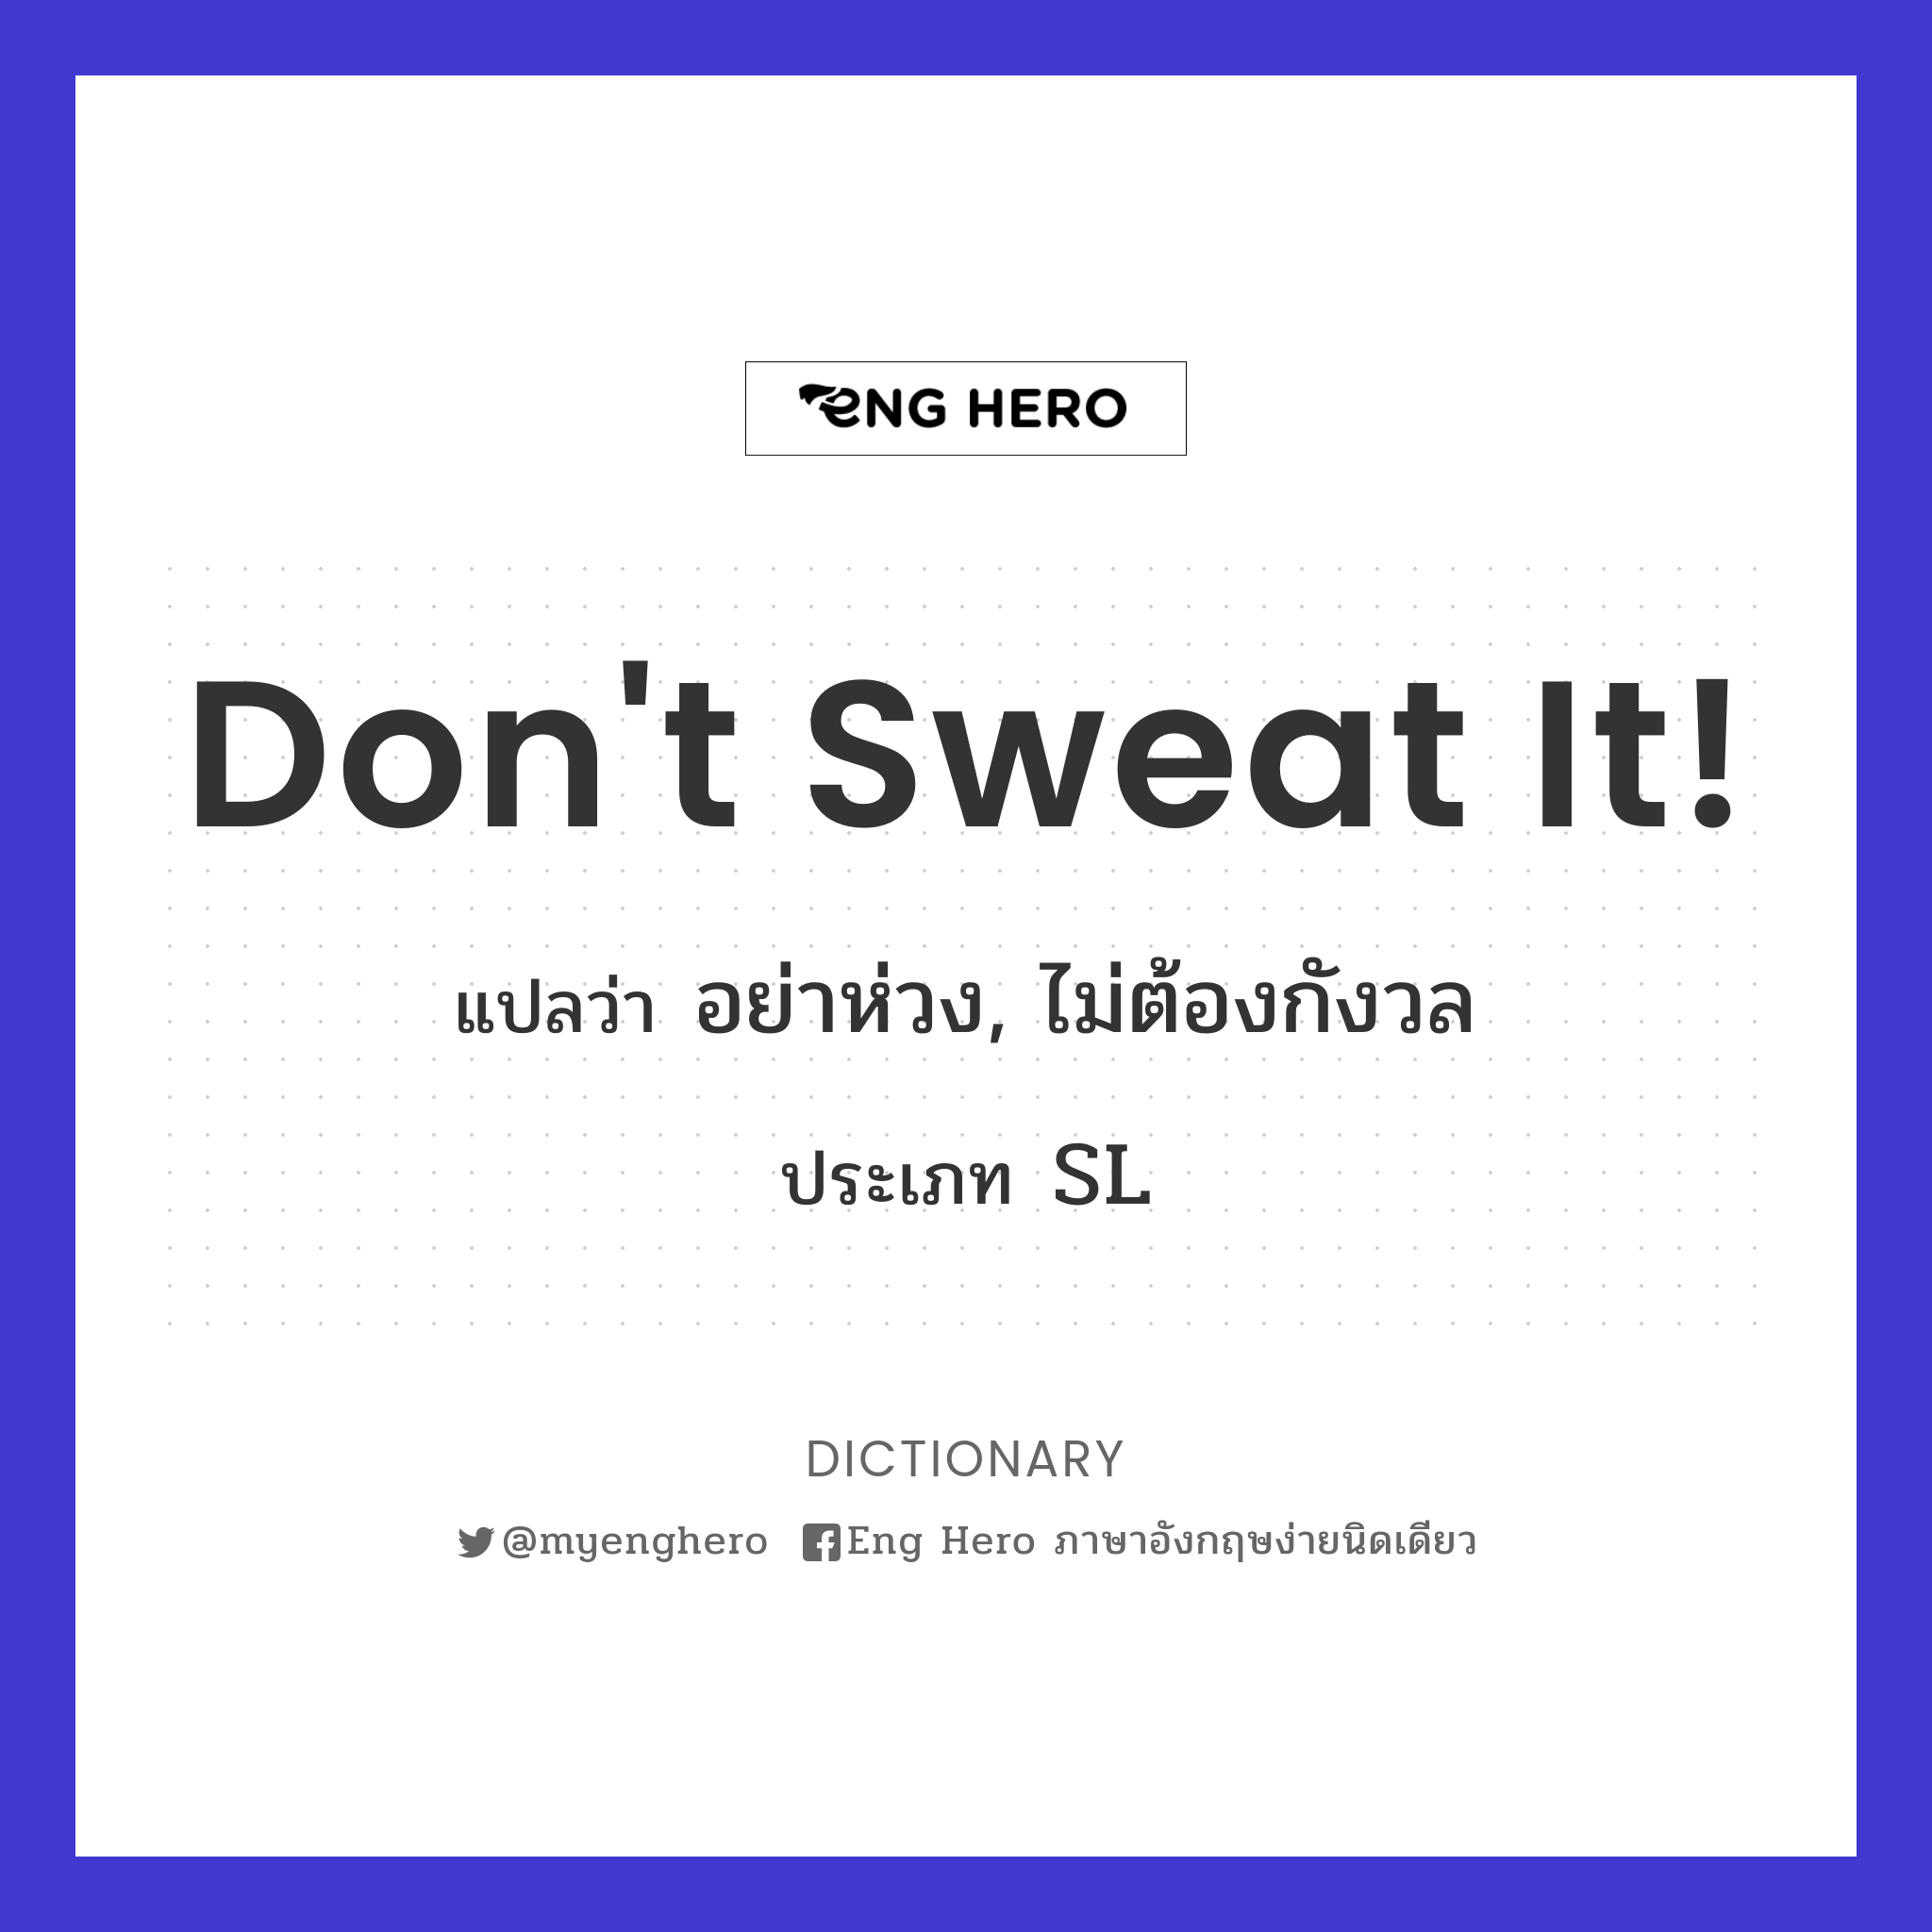 Don't sweat it!